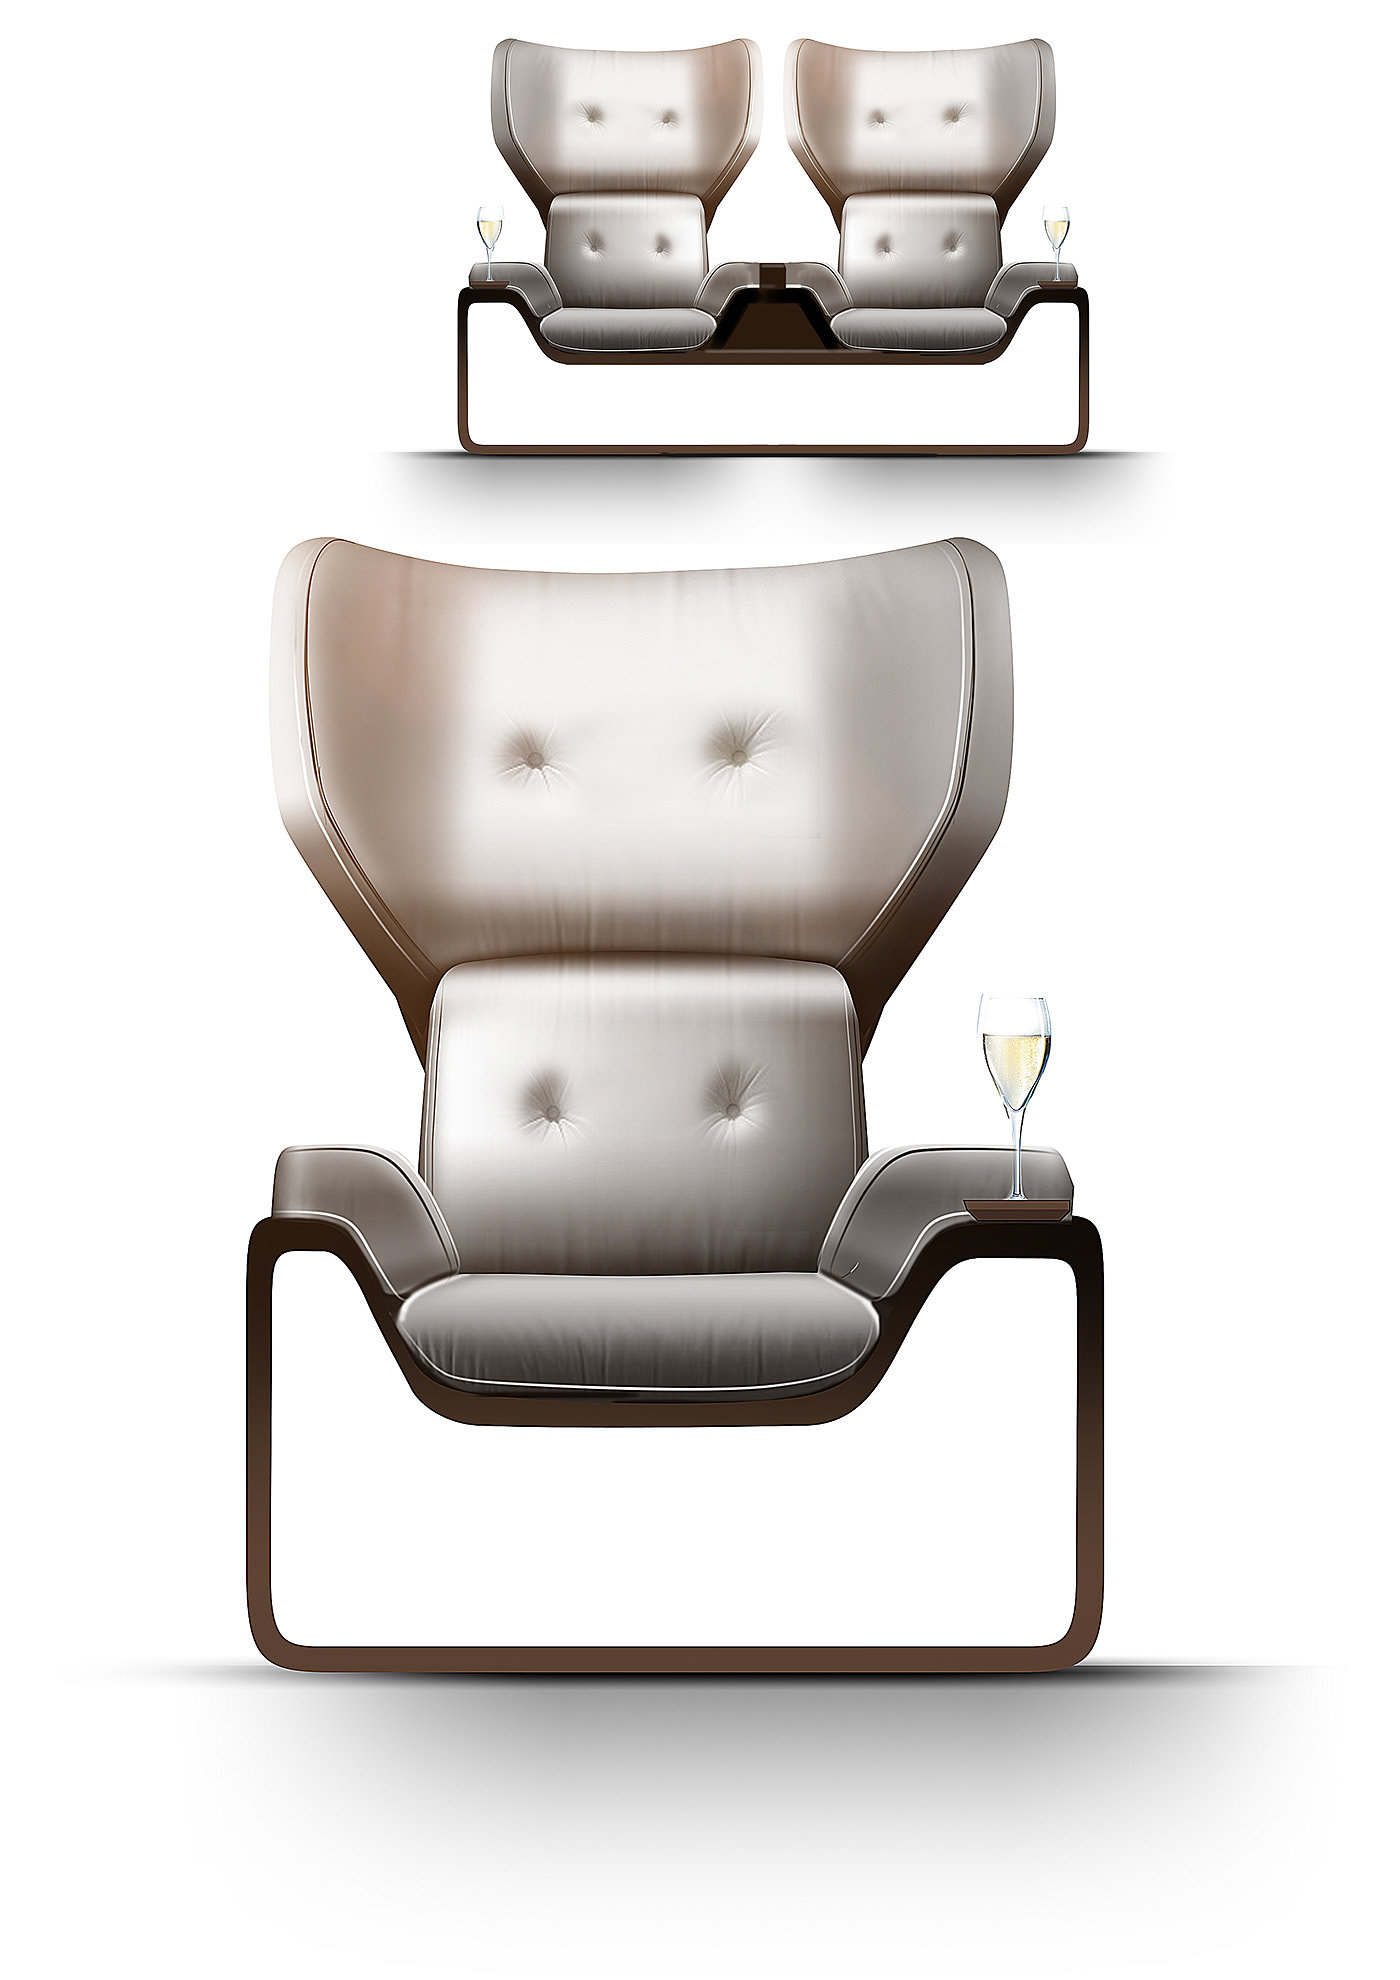 Alstom Work Study，休闲椅，室内设计，产品设计，椅子，舒适，高级概念座椅，